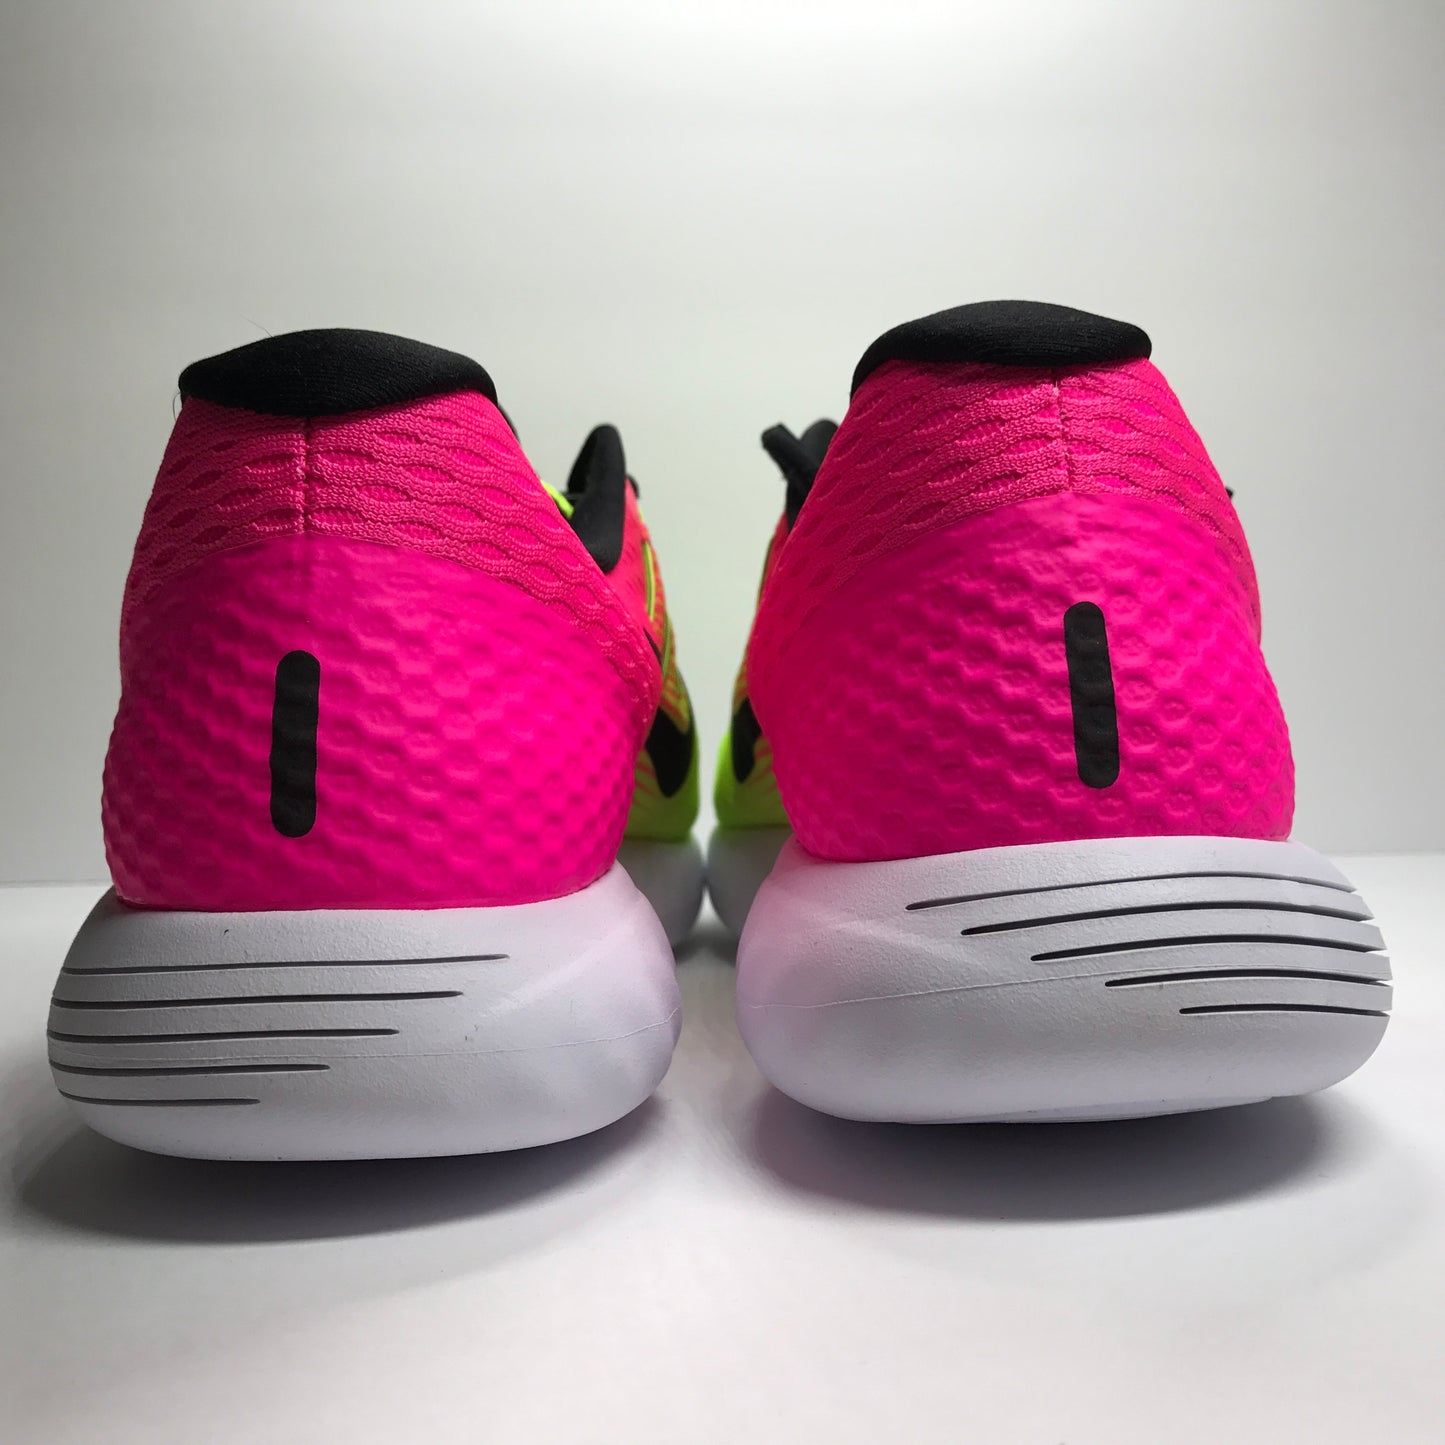 DS Nike Lunarglide 8 OC Size 10/Size 12